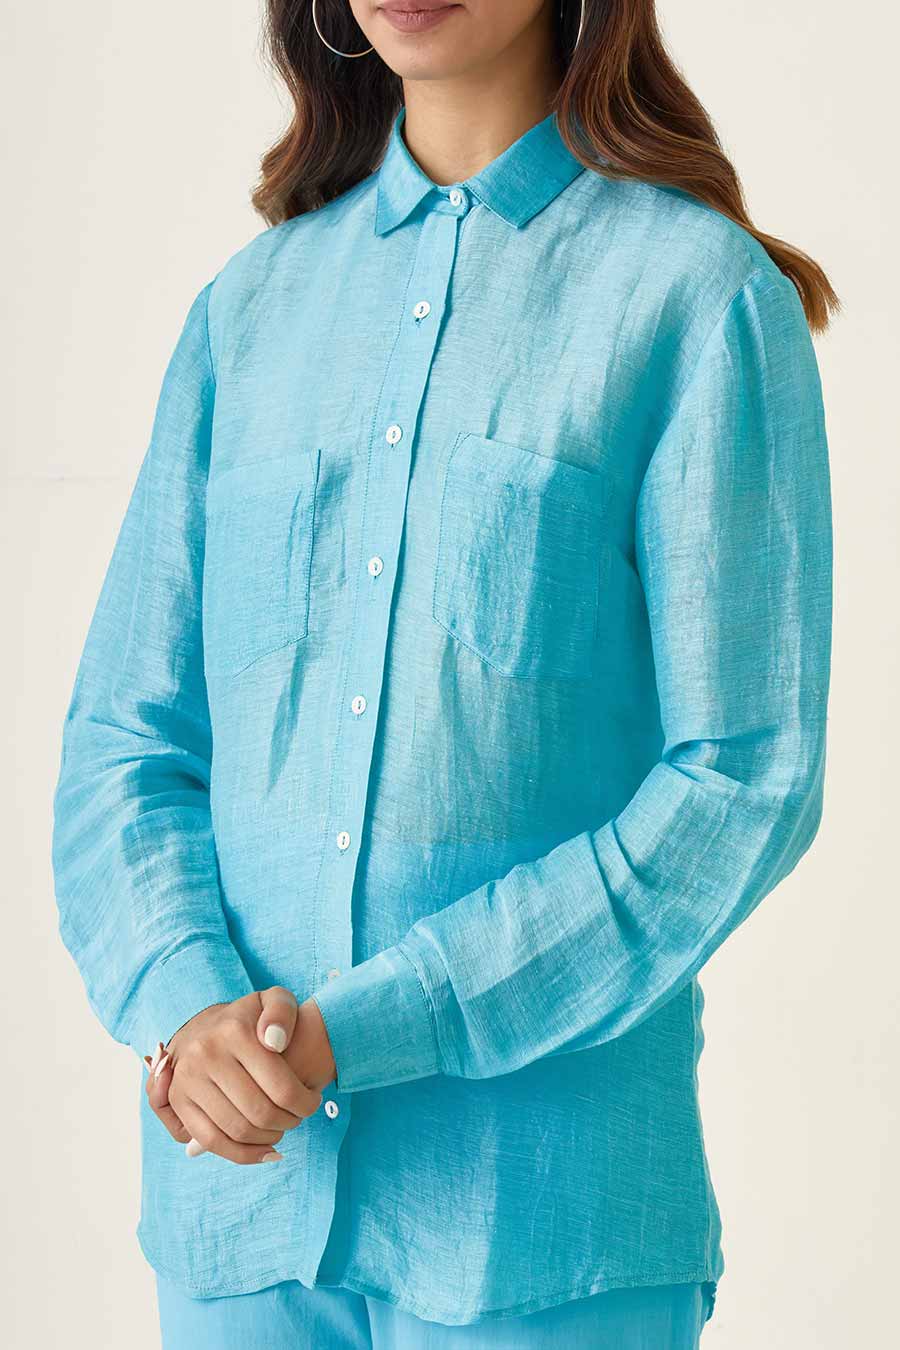 Pastel Blue Linen Shirt with Pant Co-ored Set